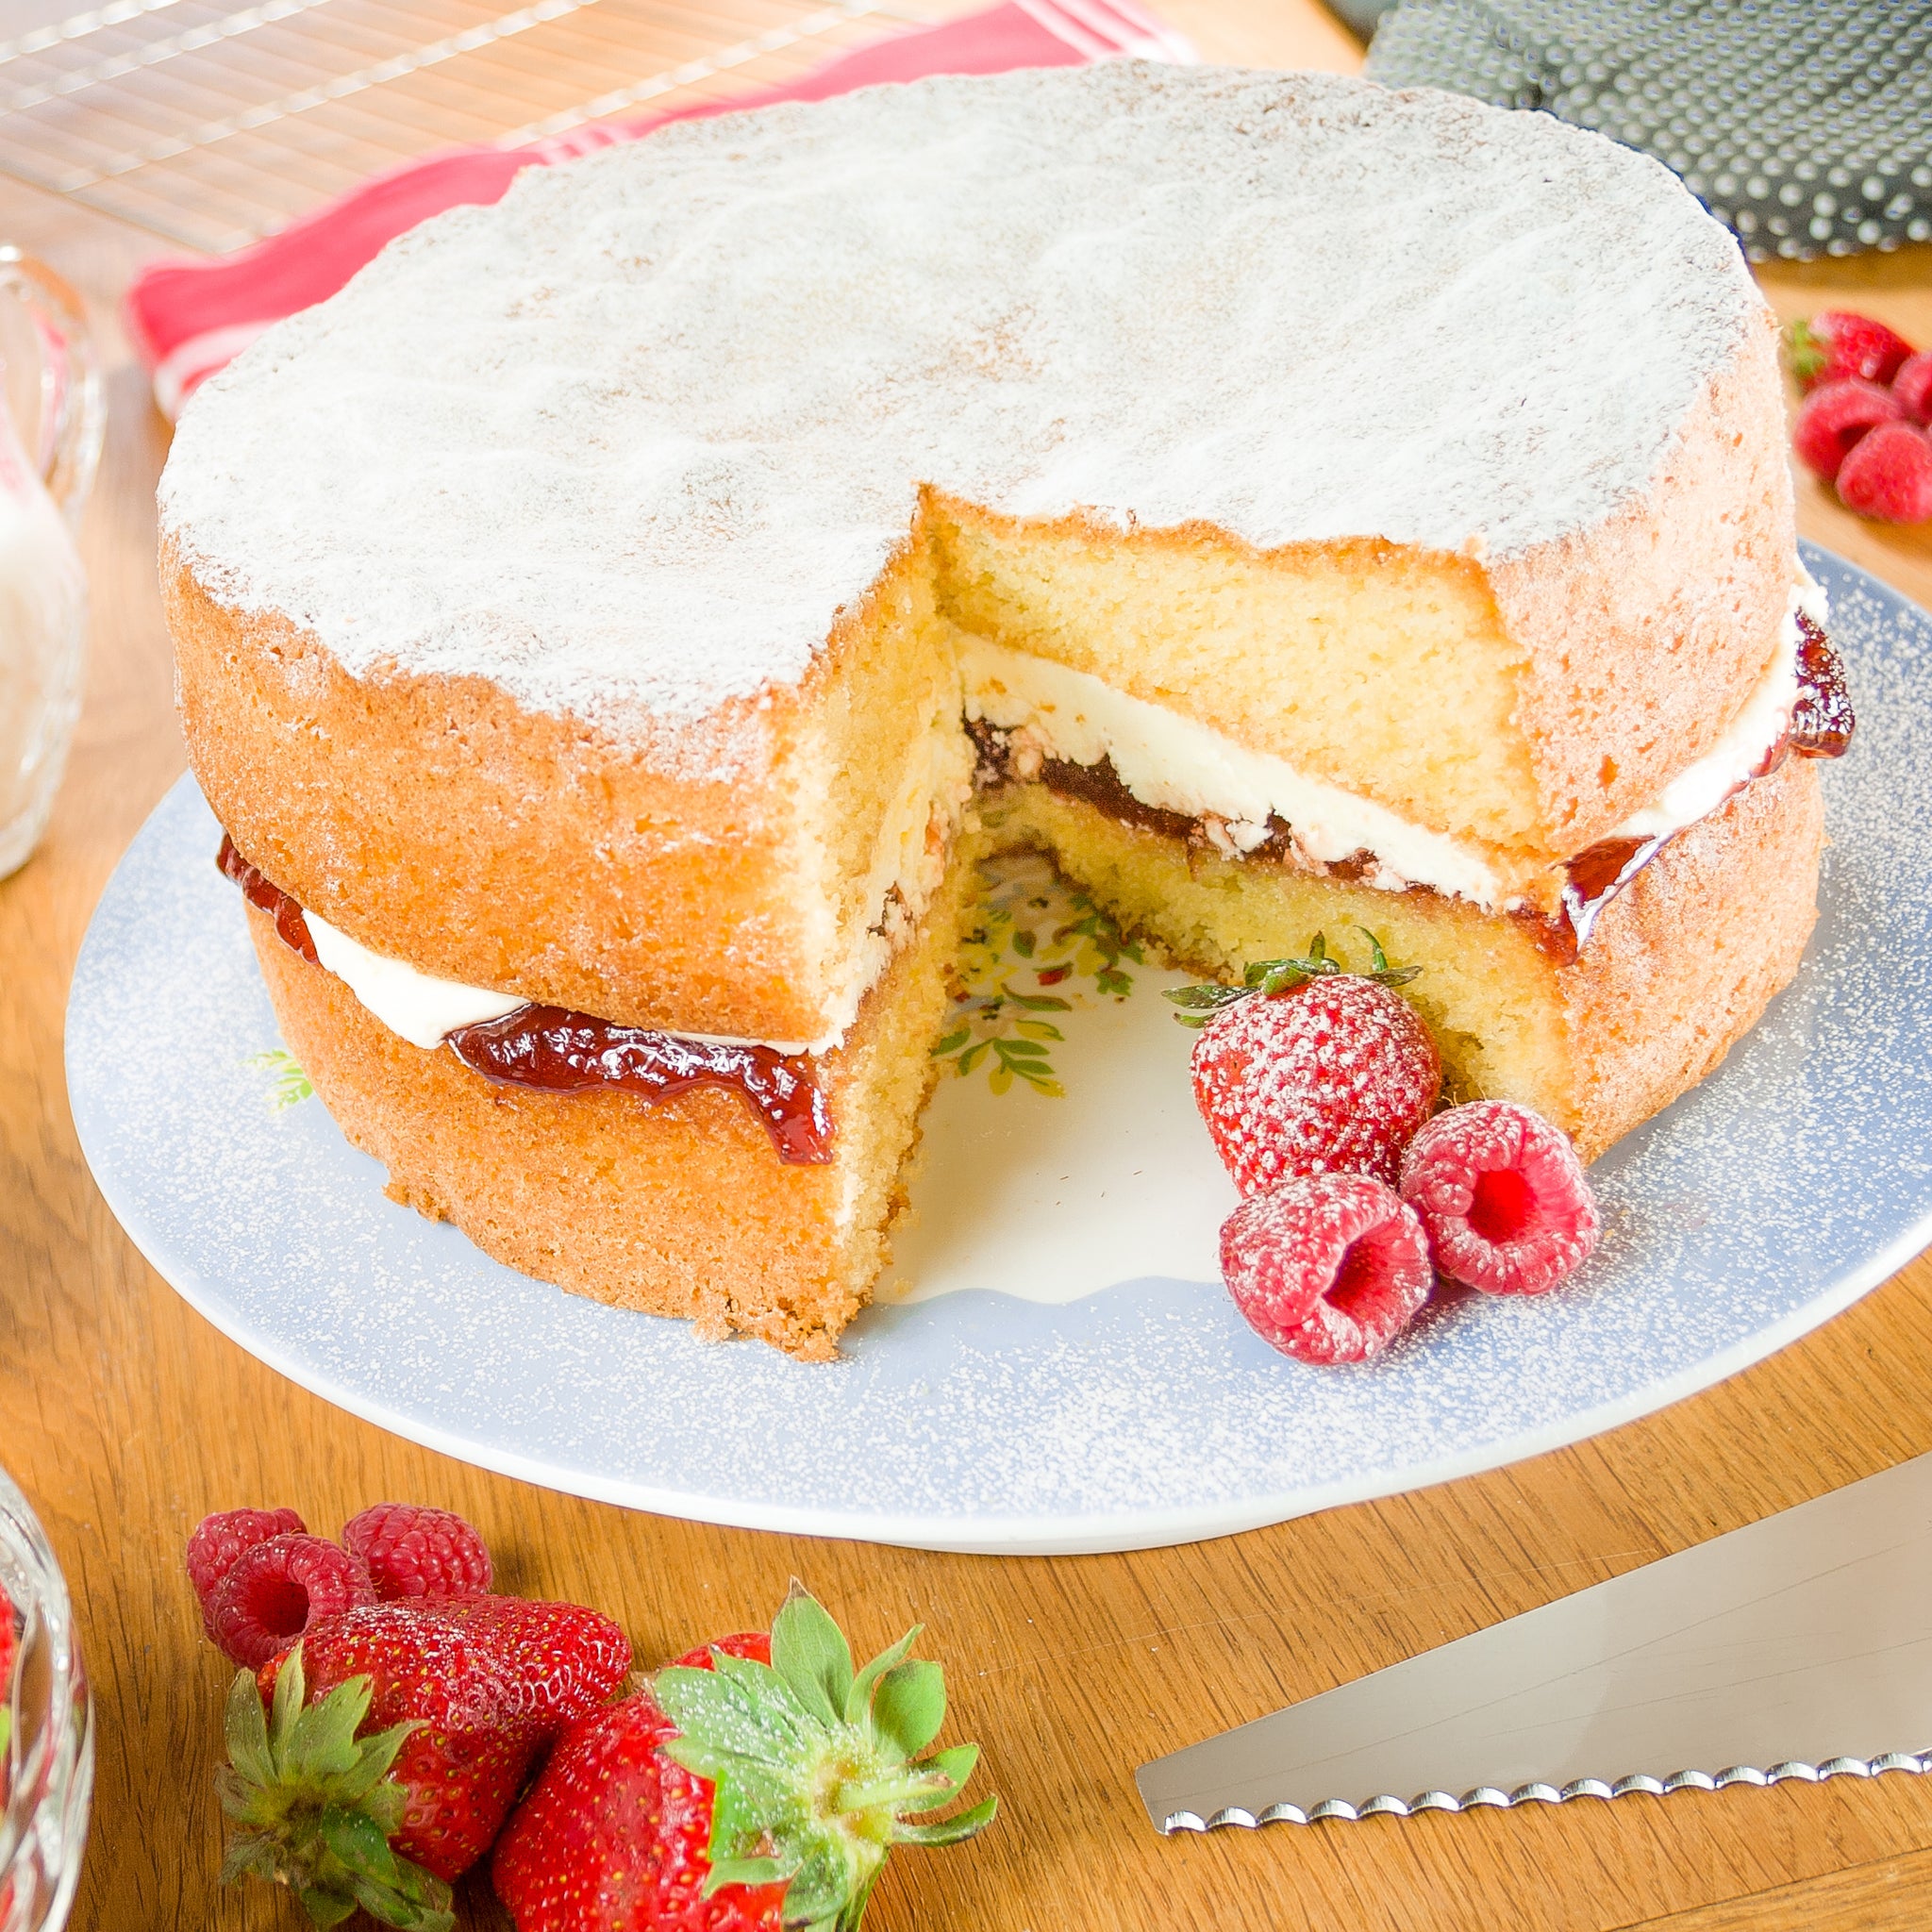 Victoria Sponge Cake Recipe